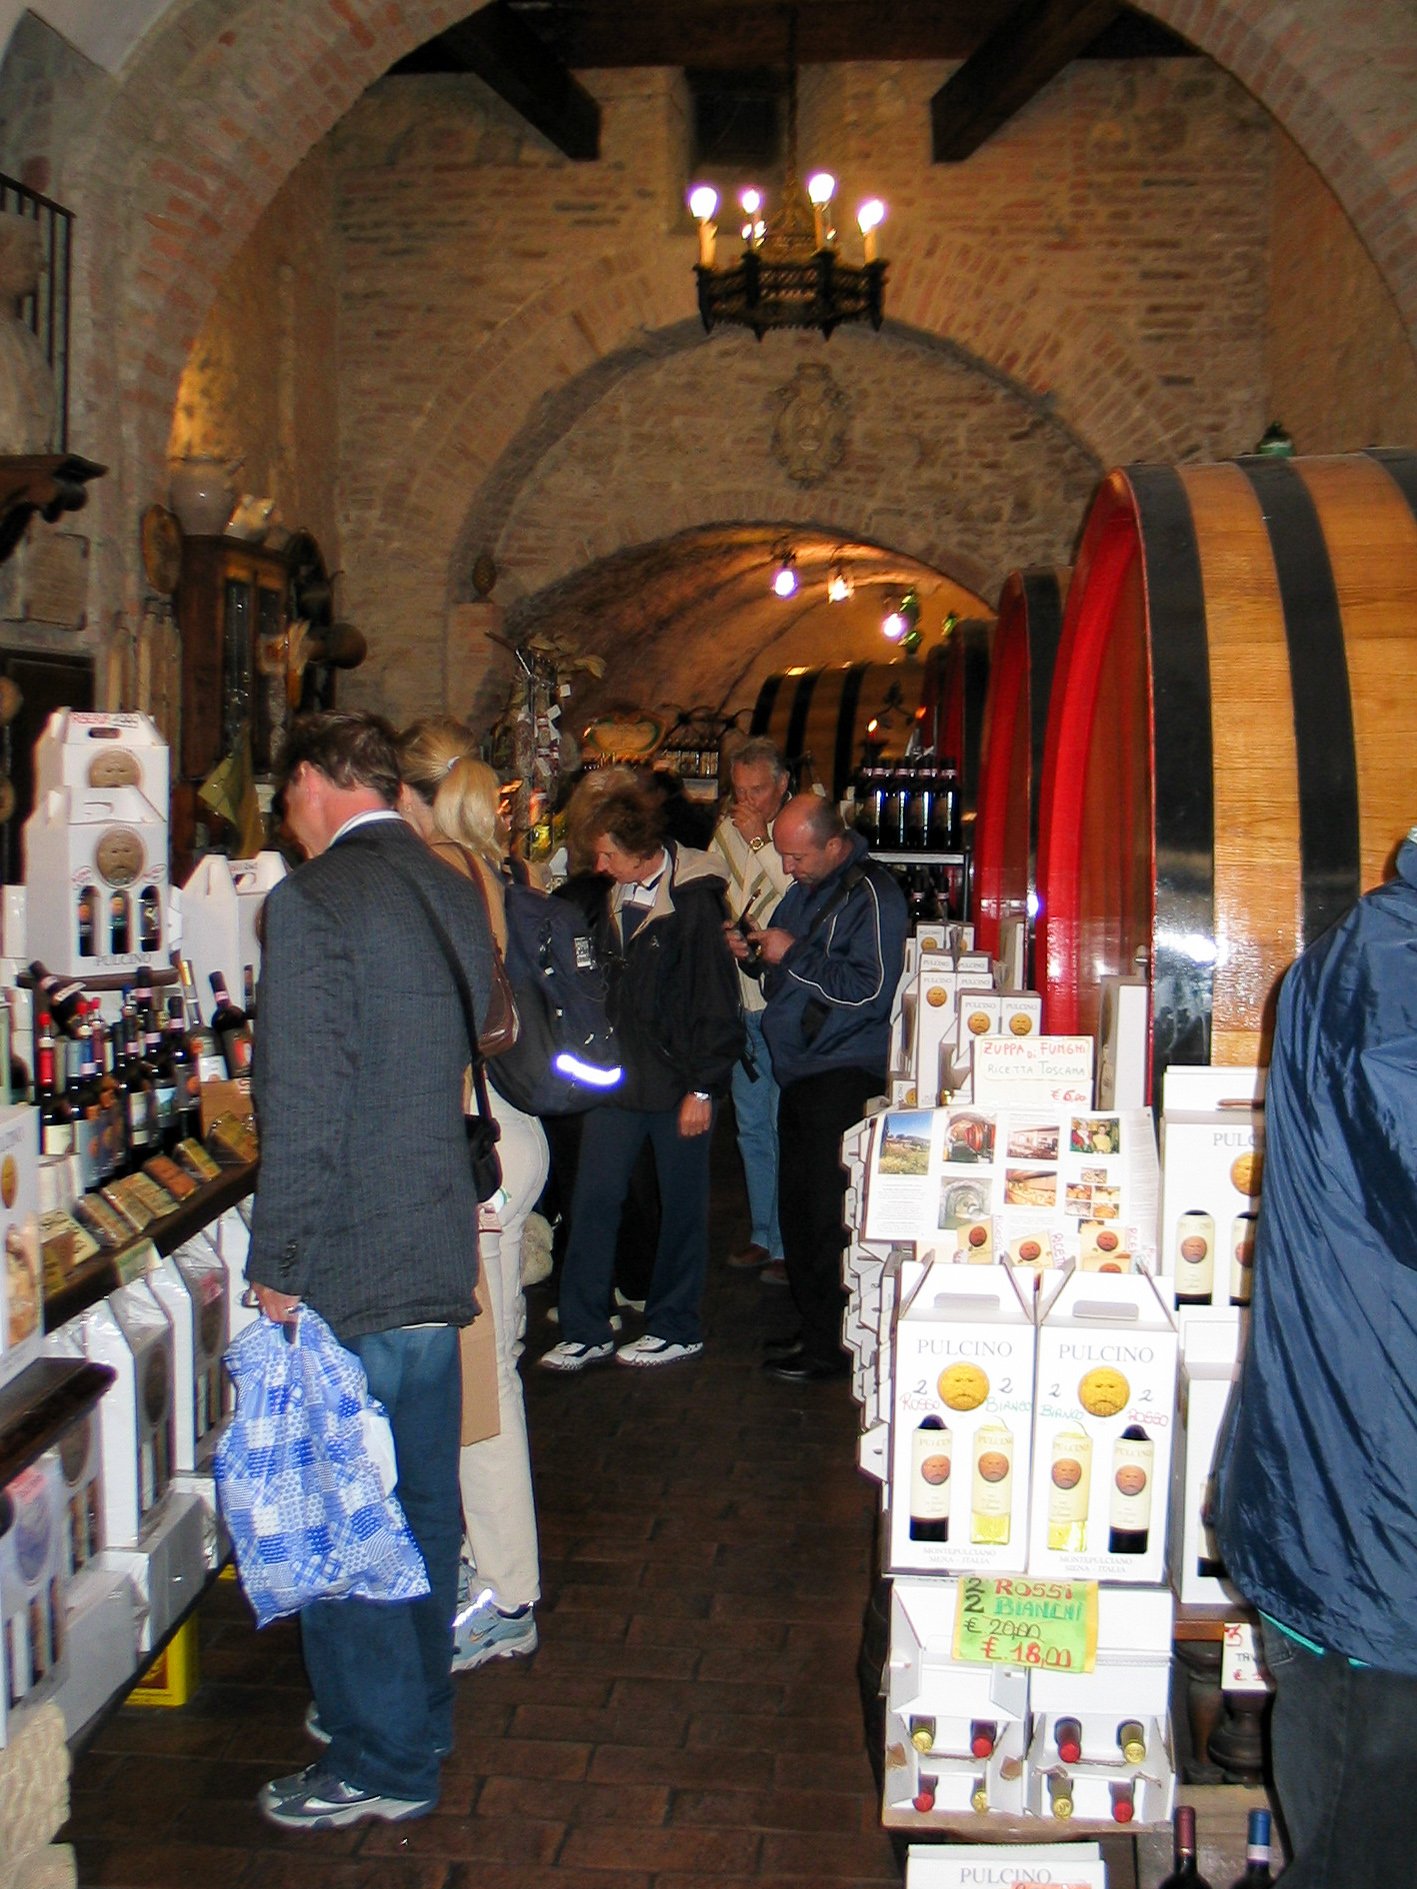 Inside Fattoria Pulcino Winery shop